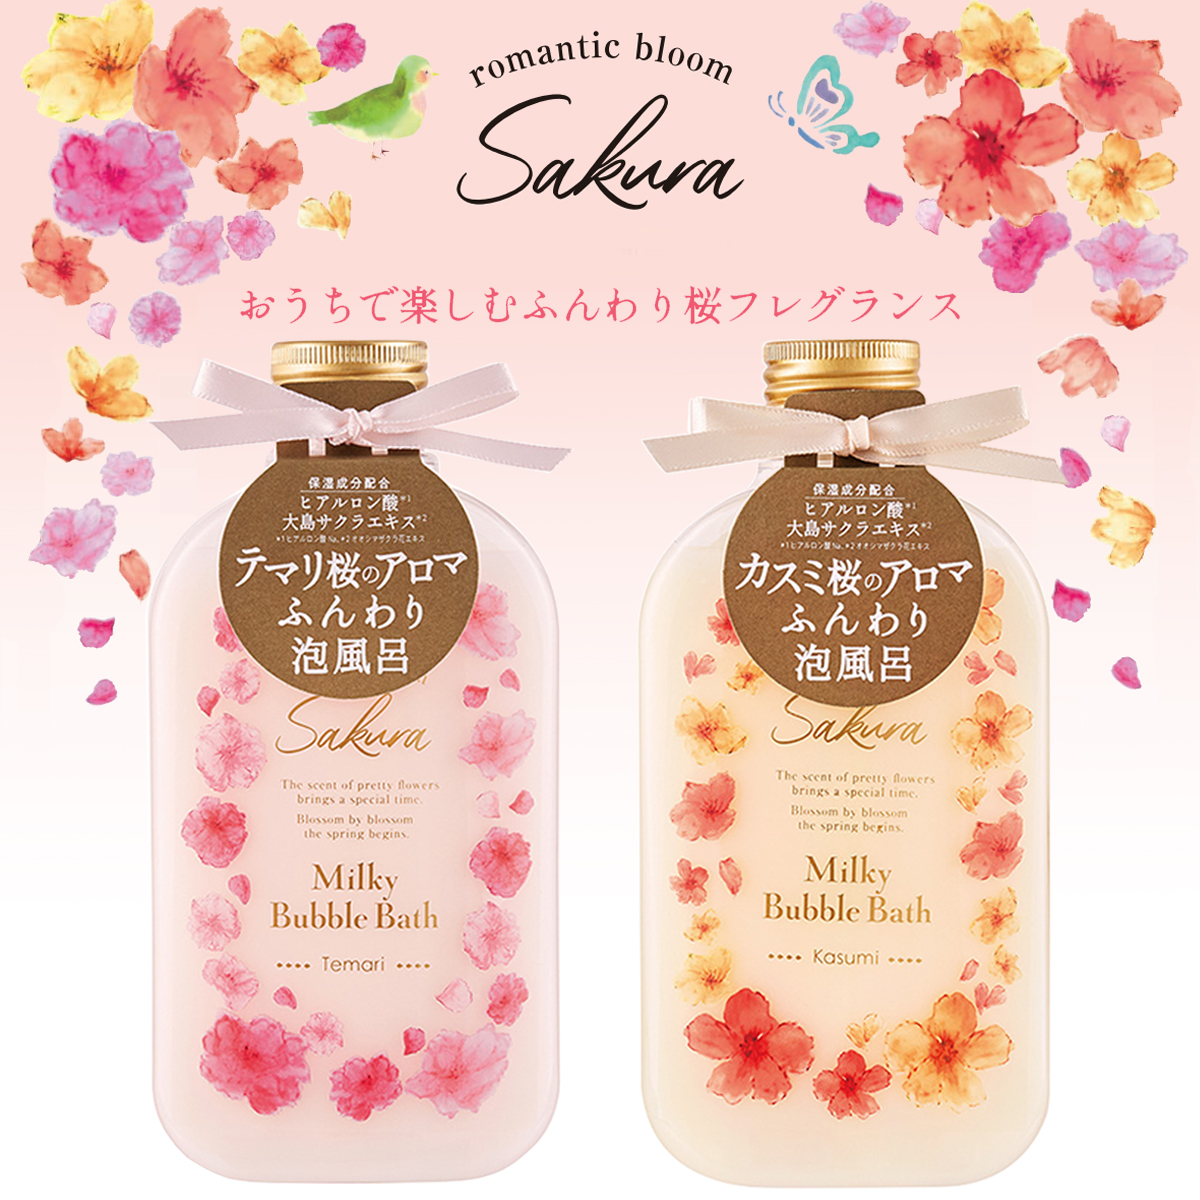 【romantic bloom Sakura】サクラ ミルキーバブルバス 入浴料 桜